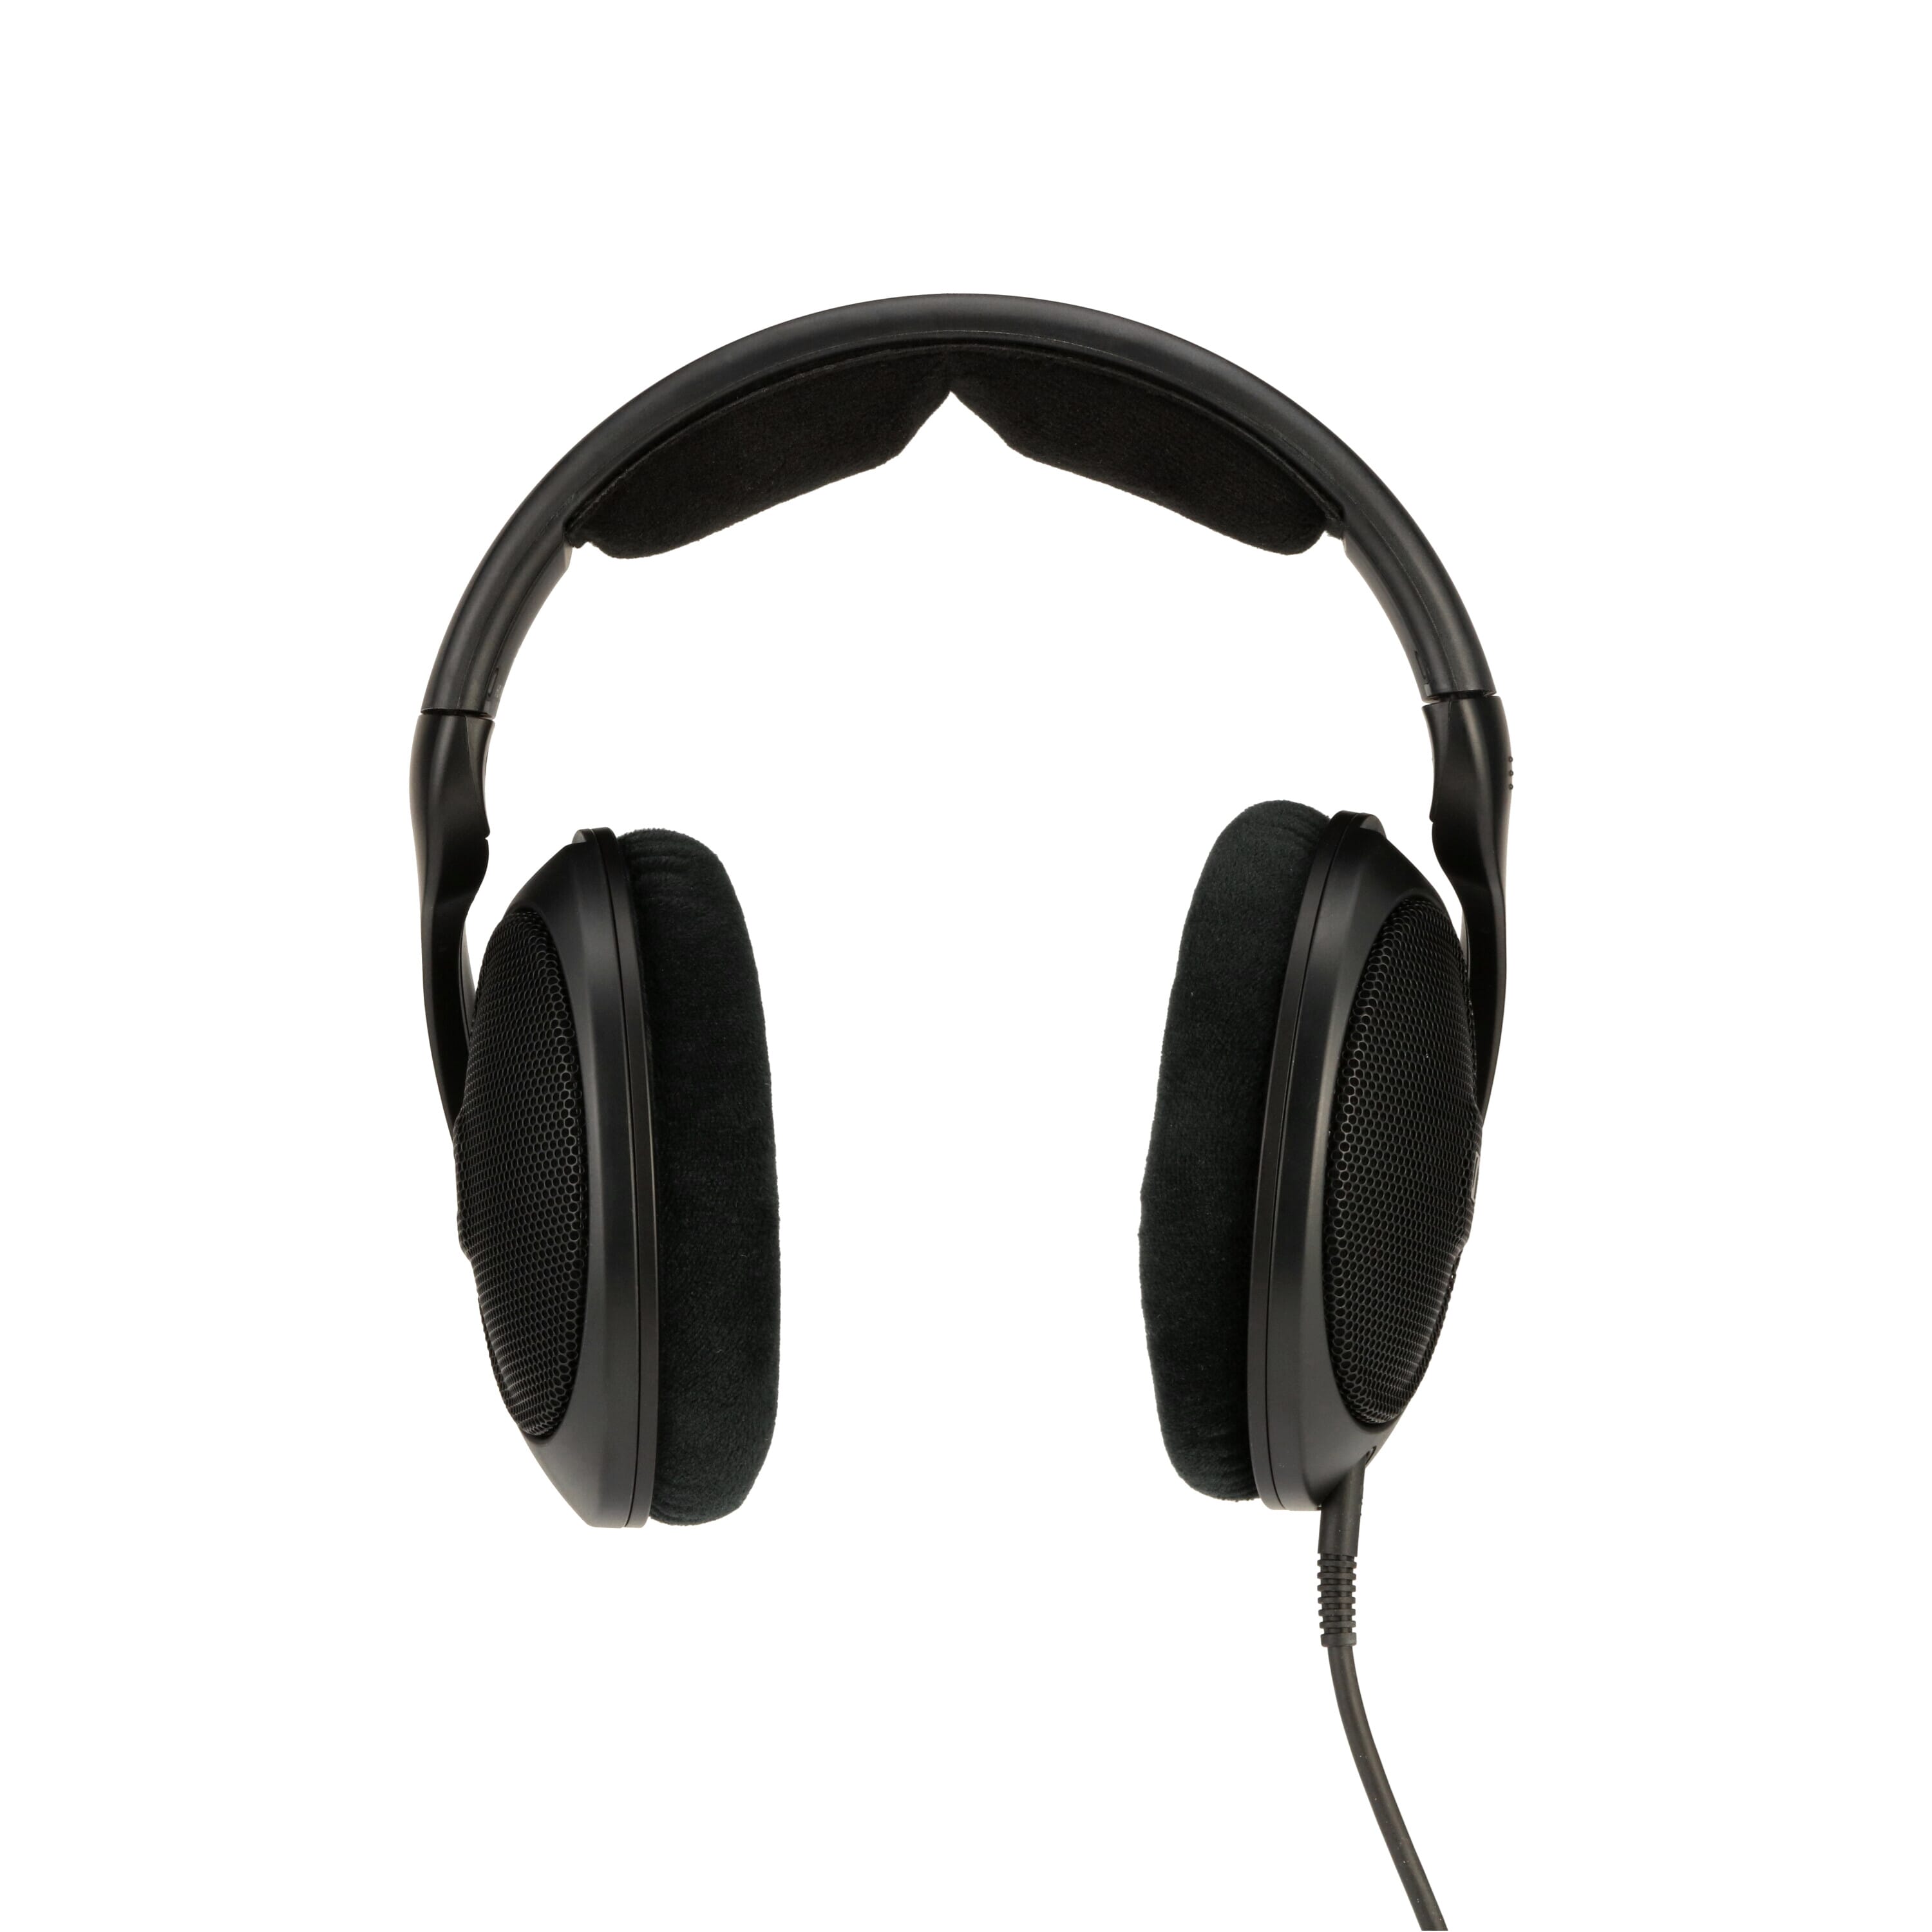 Sennheiser HD 400 PRO - - Professional studio reference headphones